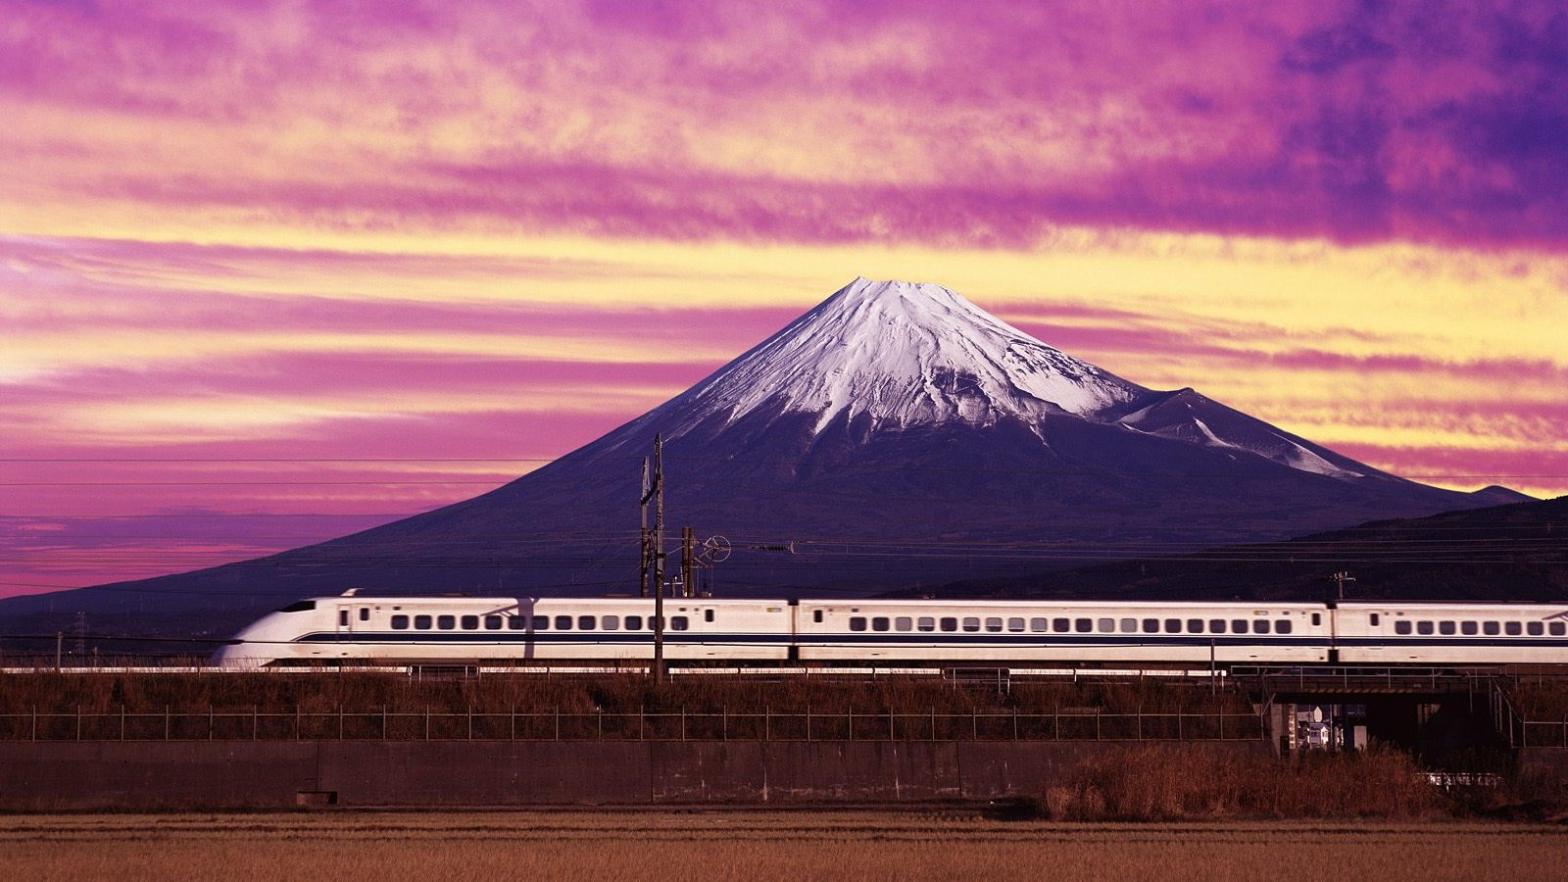 Mount Fuji with a nice purple sky as a backdrop